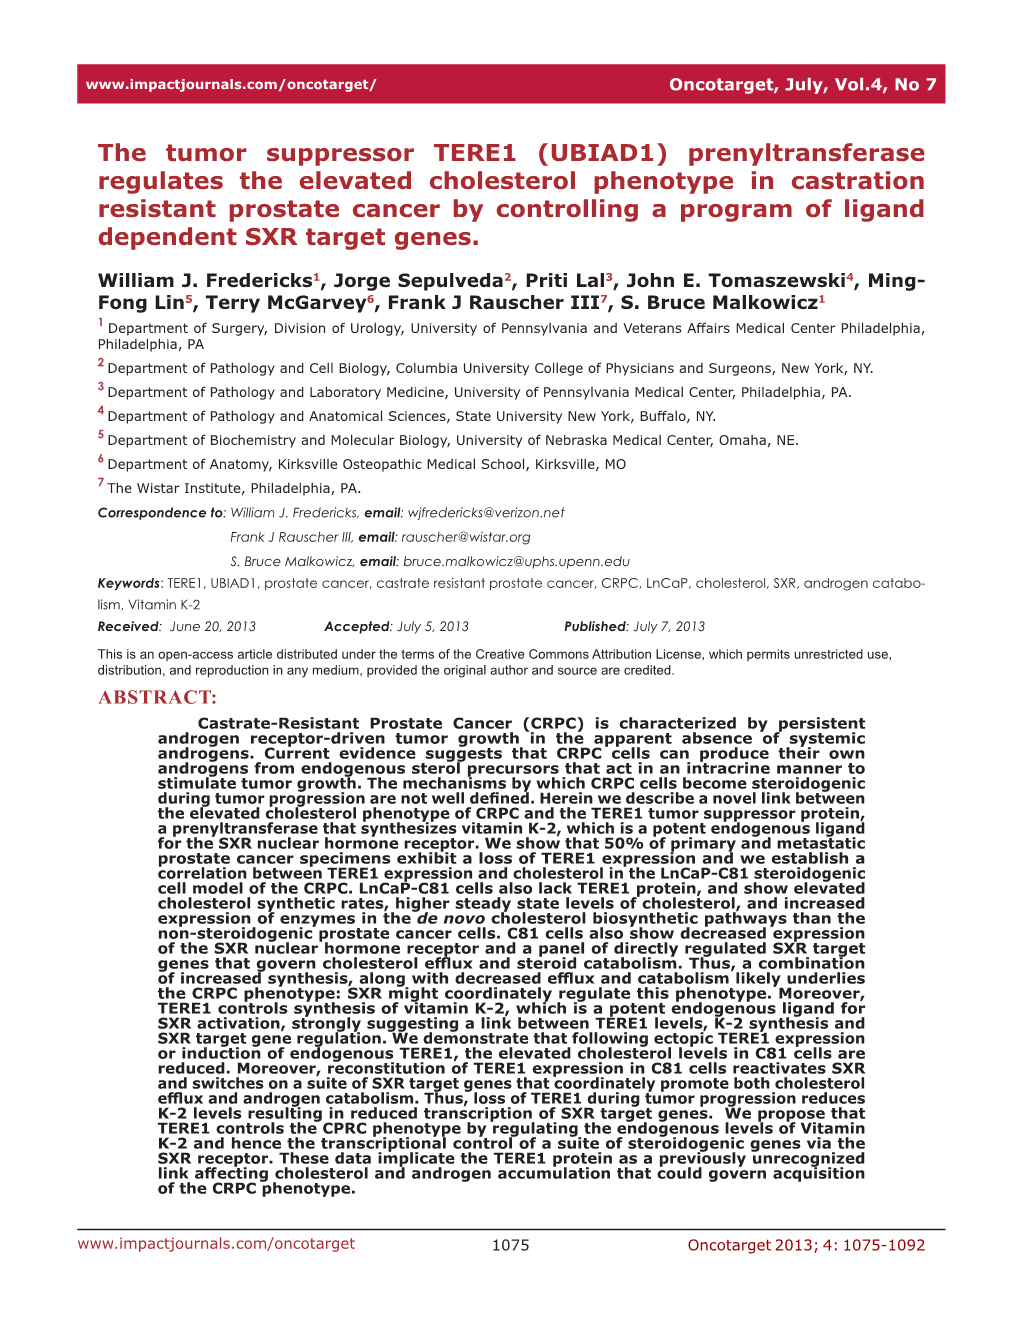 (UBIAD1) Prenyltransferase Regulates the Elevated Cholesterol Phenotype